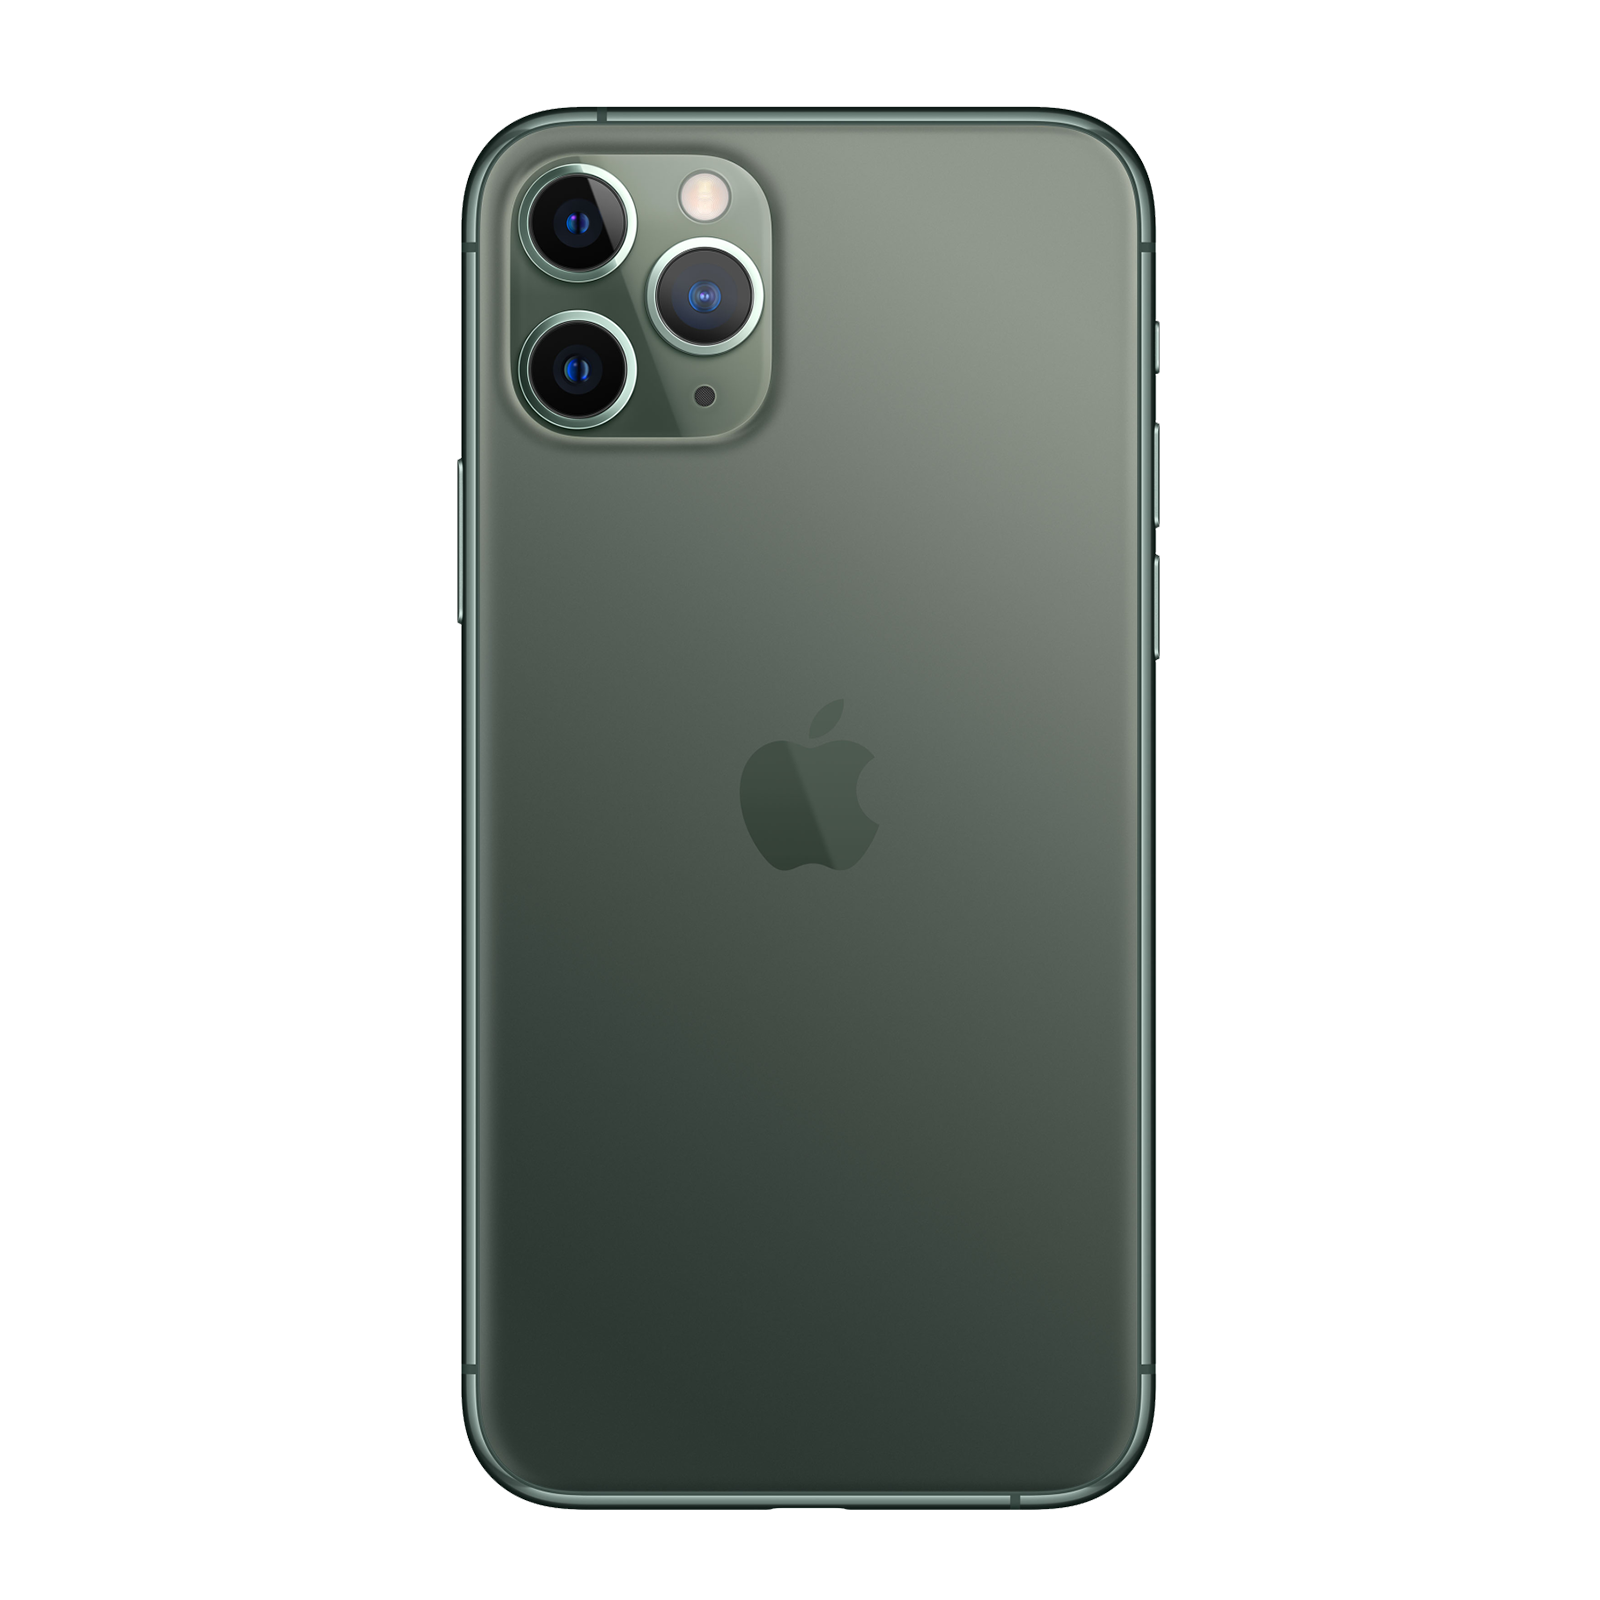 iPhone 11 Pro 512GB Midnight Green Good Unlocked - New Battery